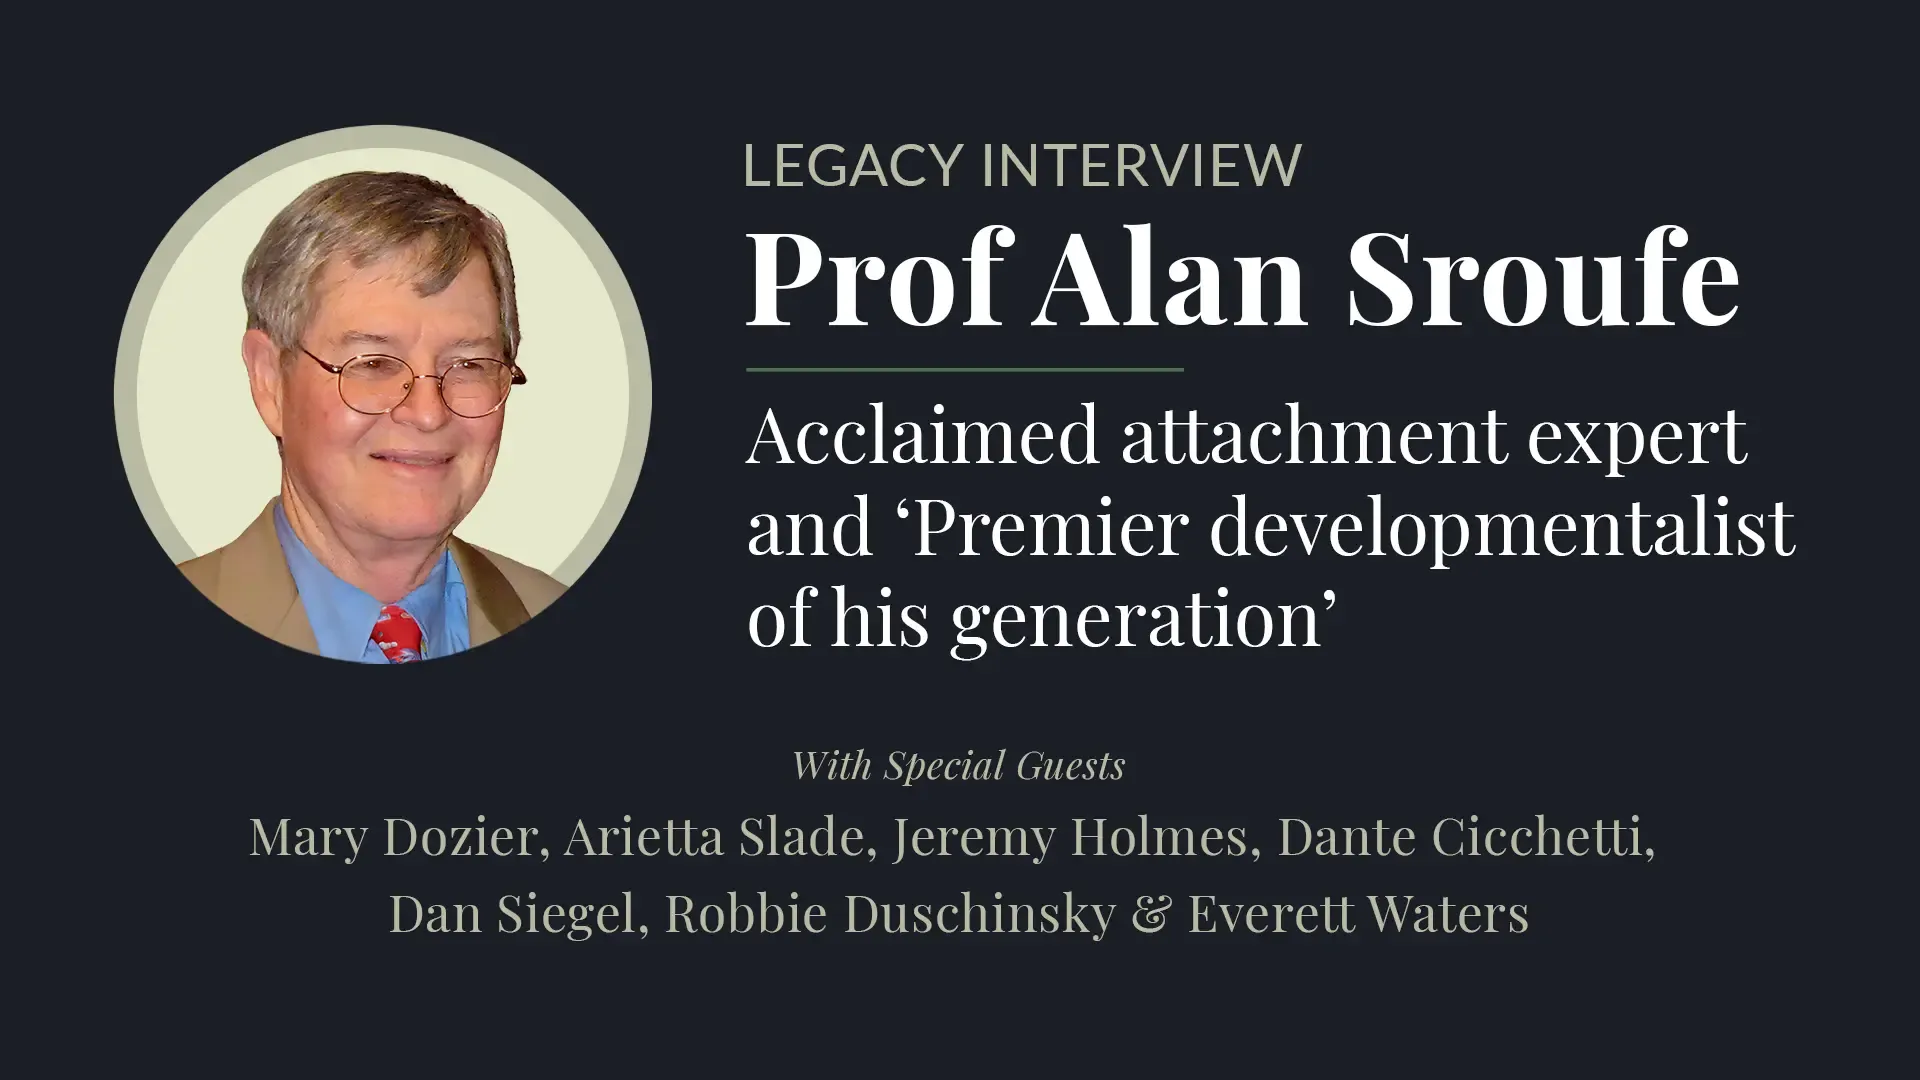 Prof Alan Sroufe Legacy Interview recording details